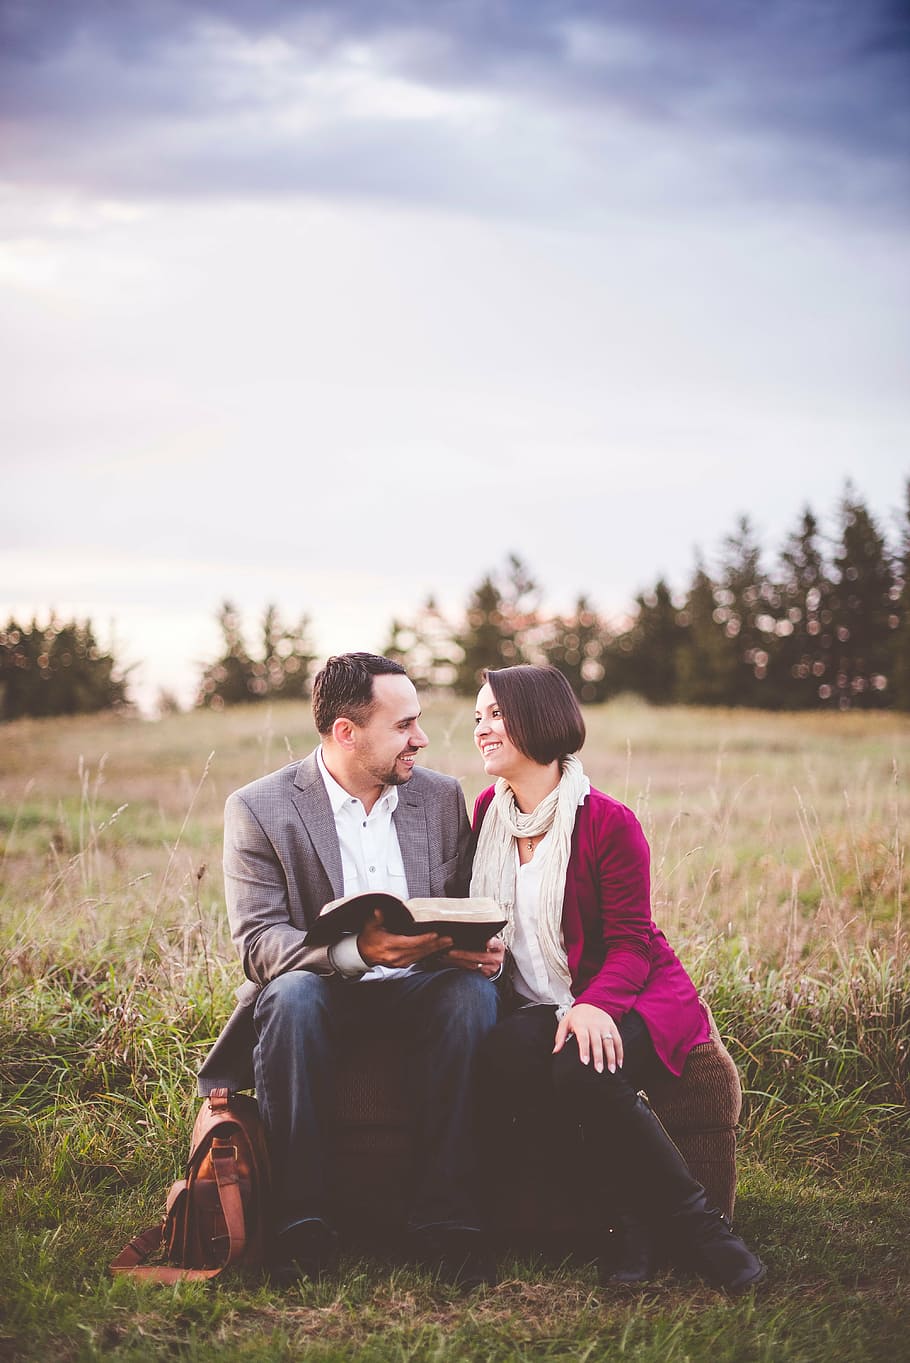 man, woman, sitting, grass fields, daytime, couple, stool, reading, books, people